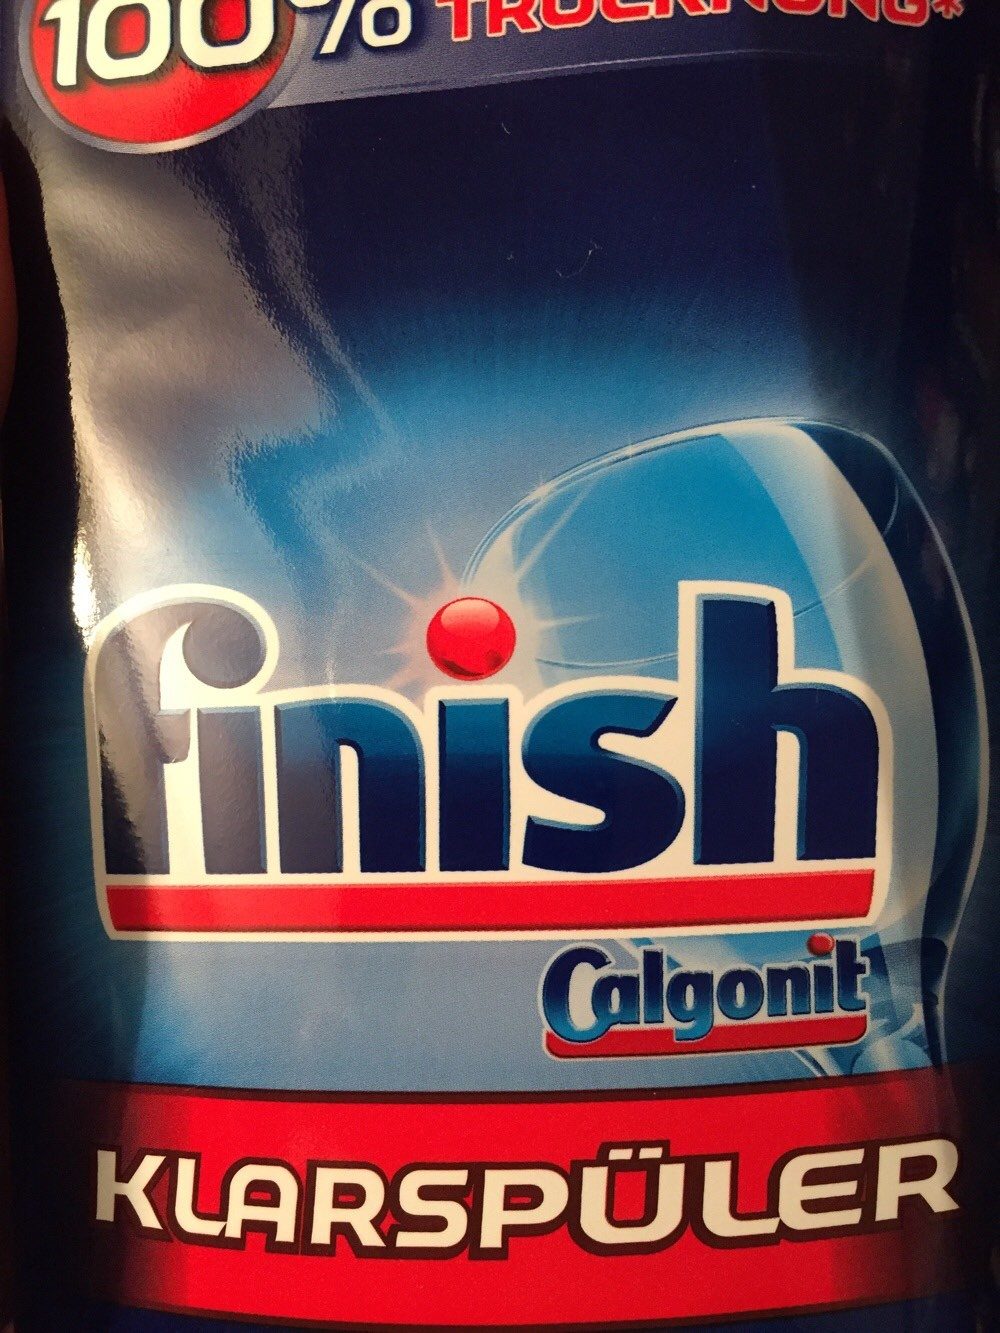 finish Klarspüler - Produit - de